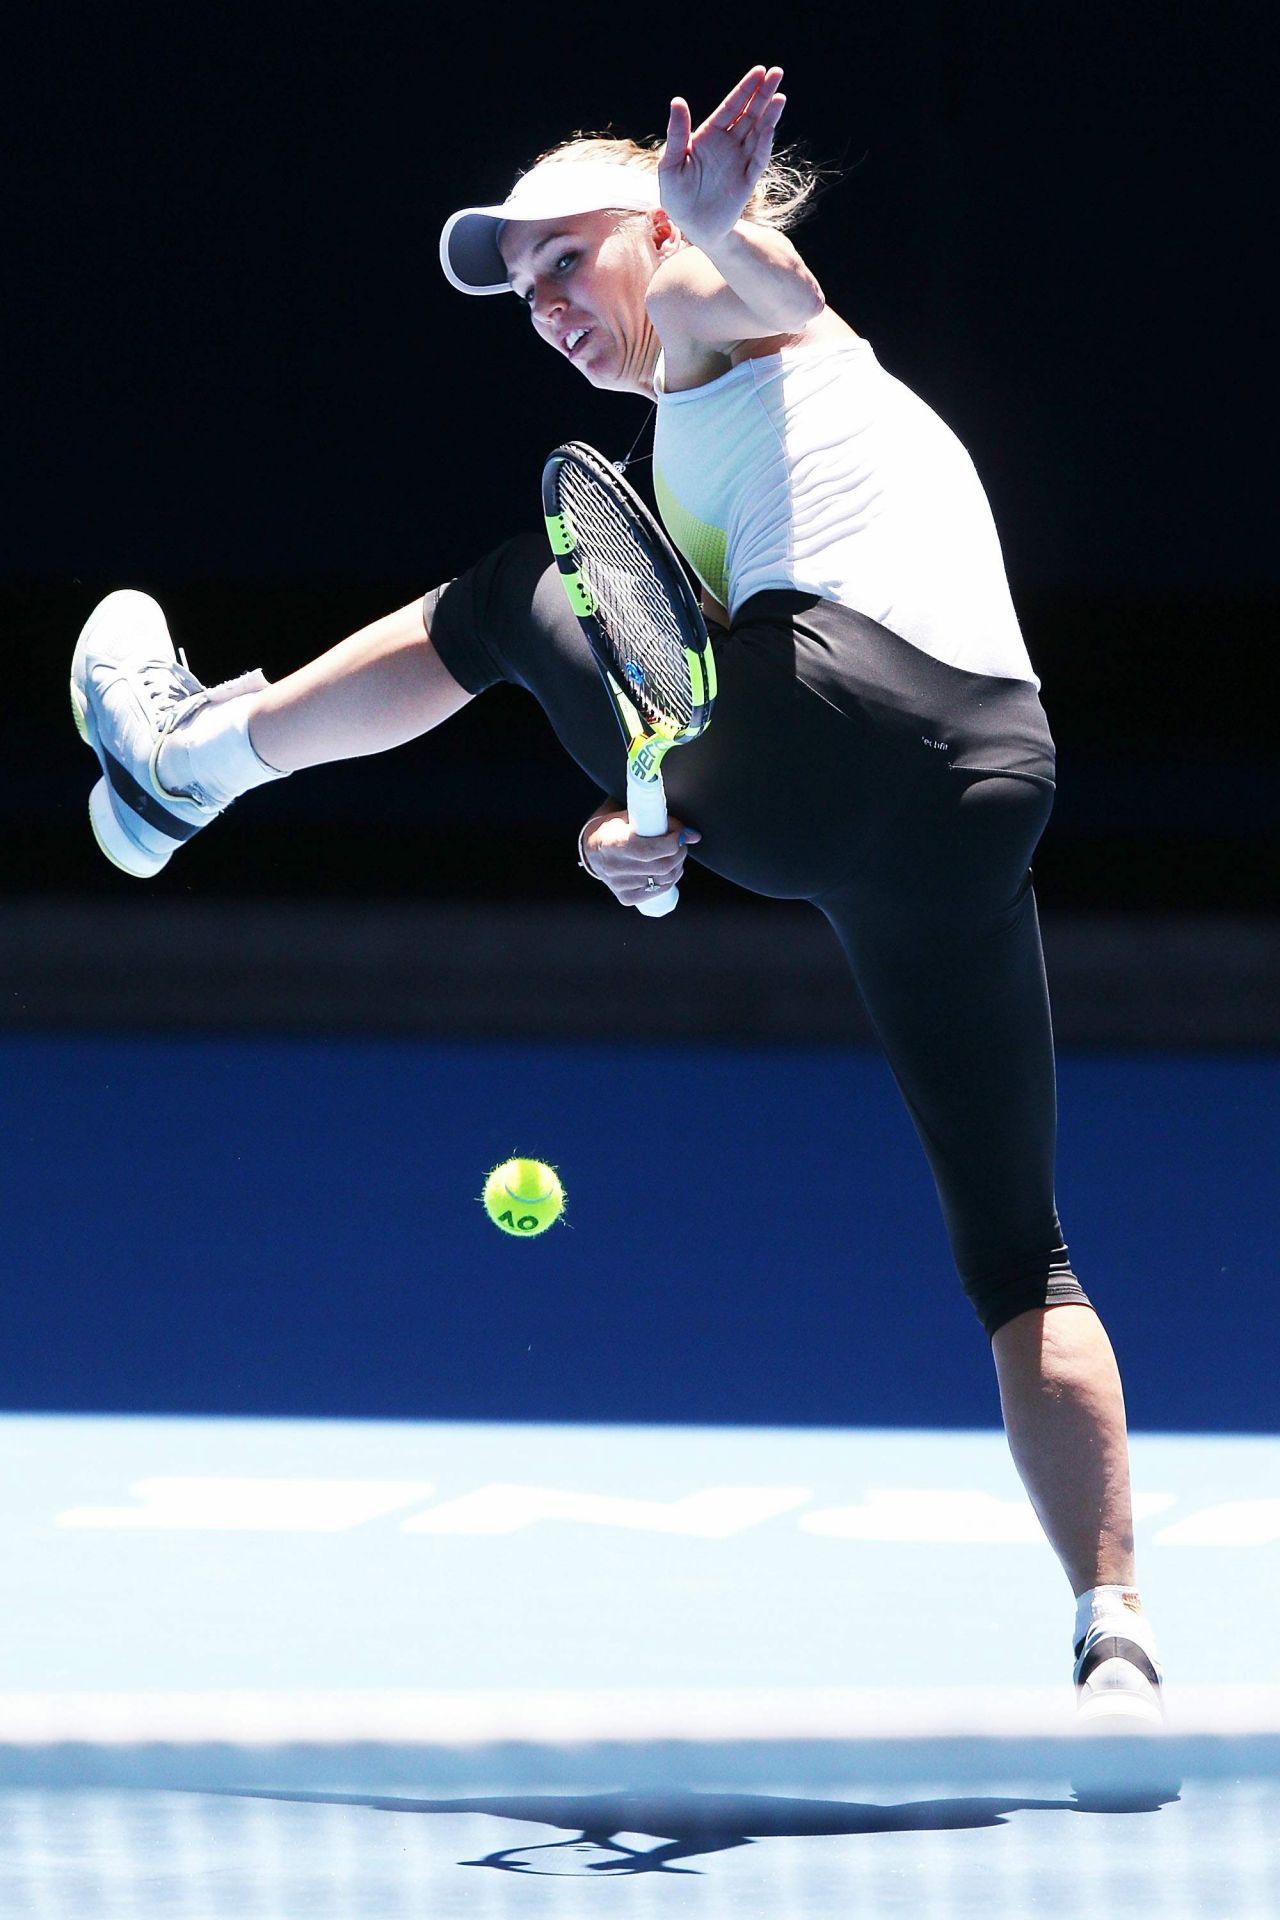 Caroline Wozniacki Practice Session at the Australian Open in Melbourne1280 x 1920